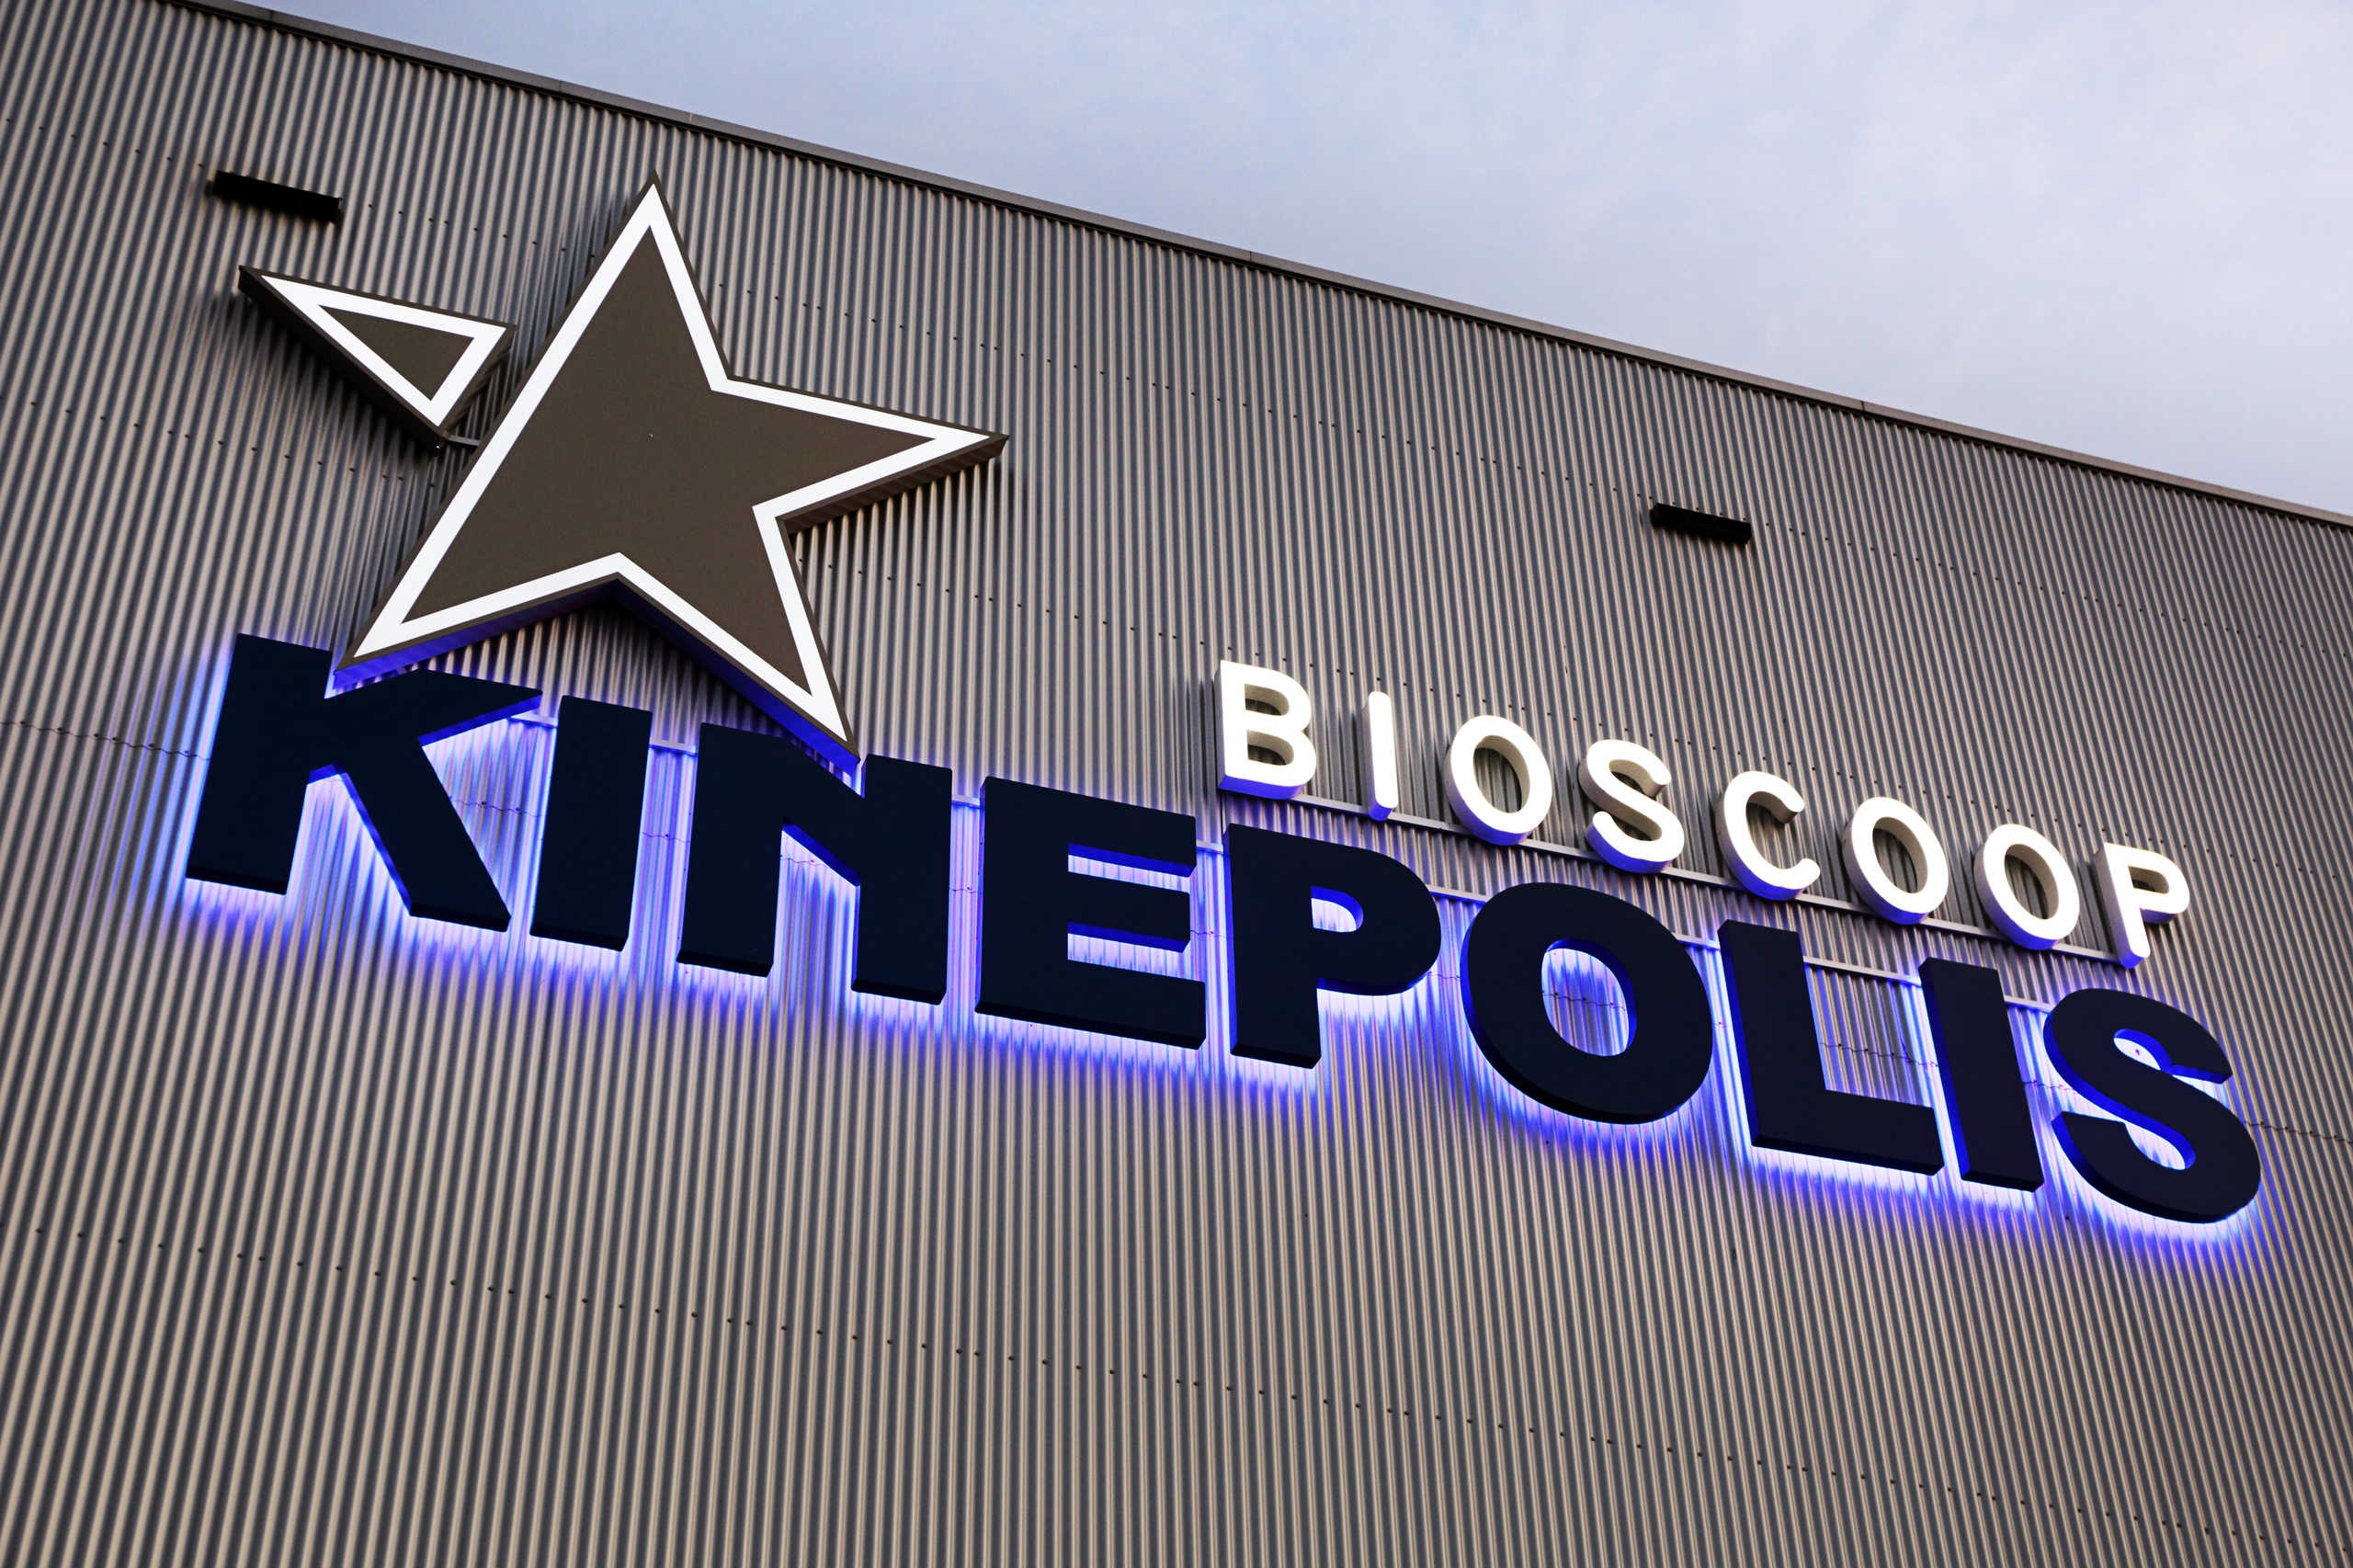 De Kinepolis bioscoop in Breda. 